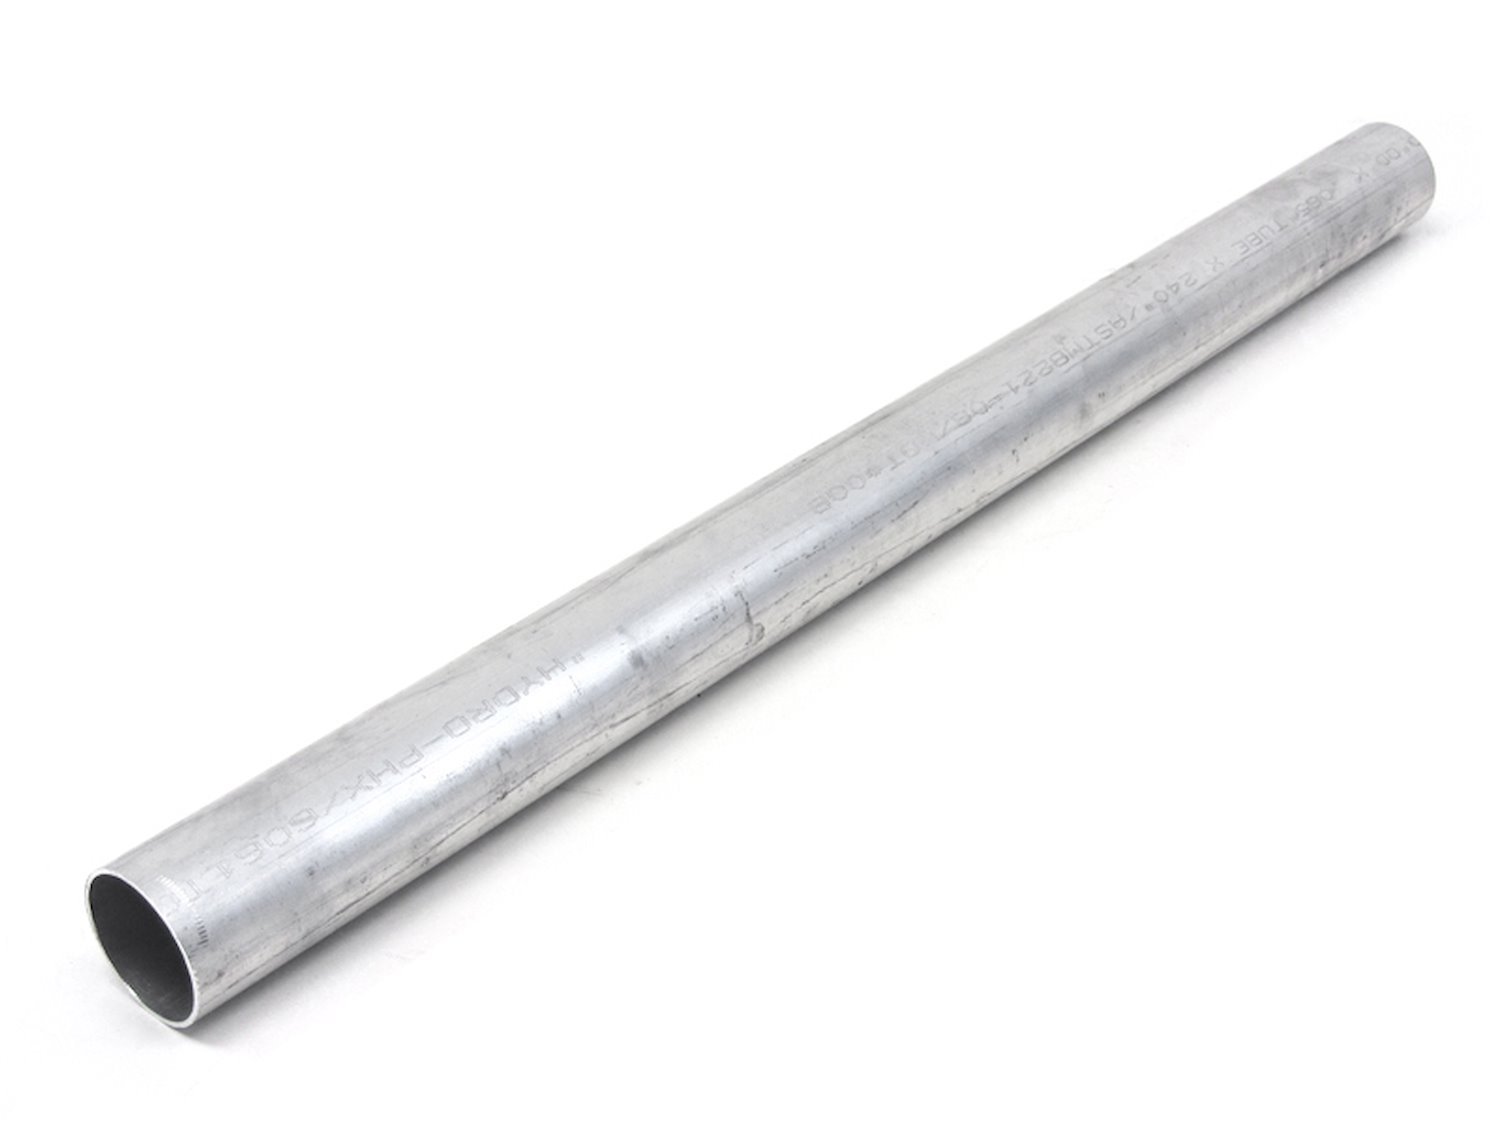 AST-2F-275 Aluminum Tubing, 6061 Aluminum, Straight Tubing, 2-3/4 in. OD, Seamless, Raw Finish, 2 ft. Long